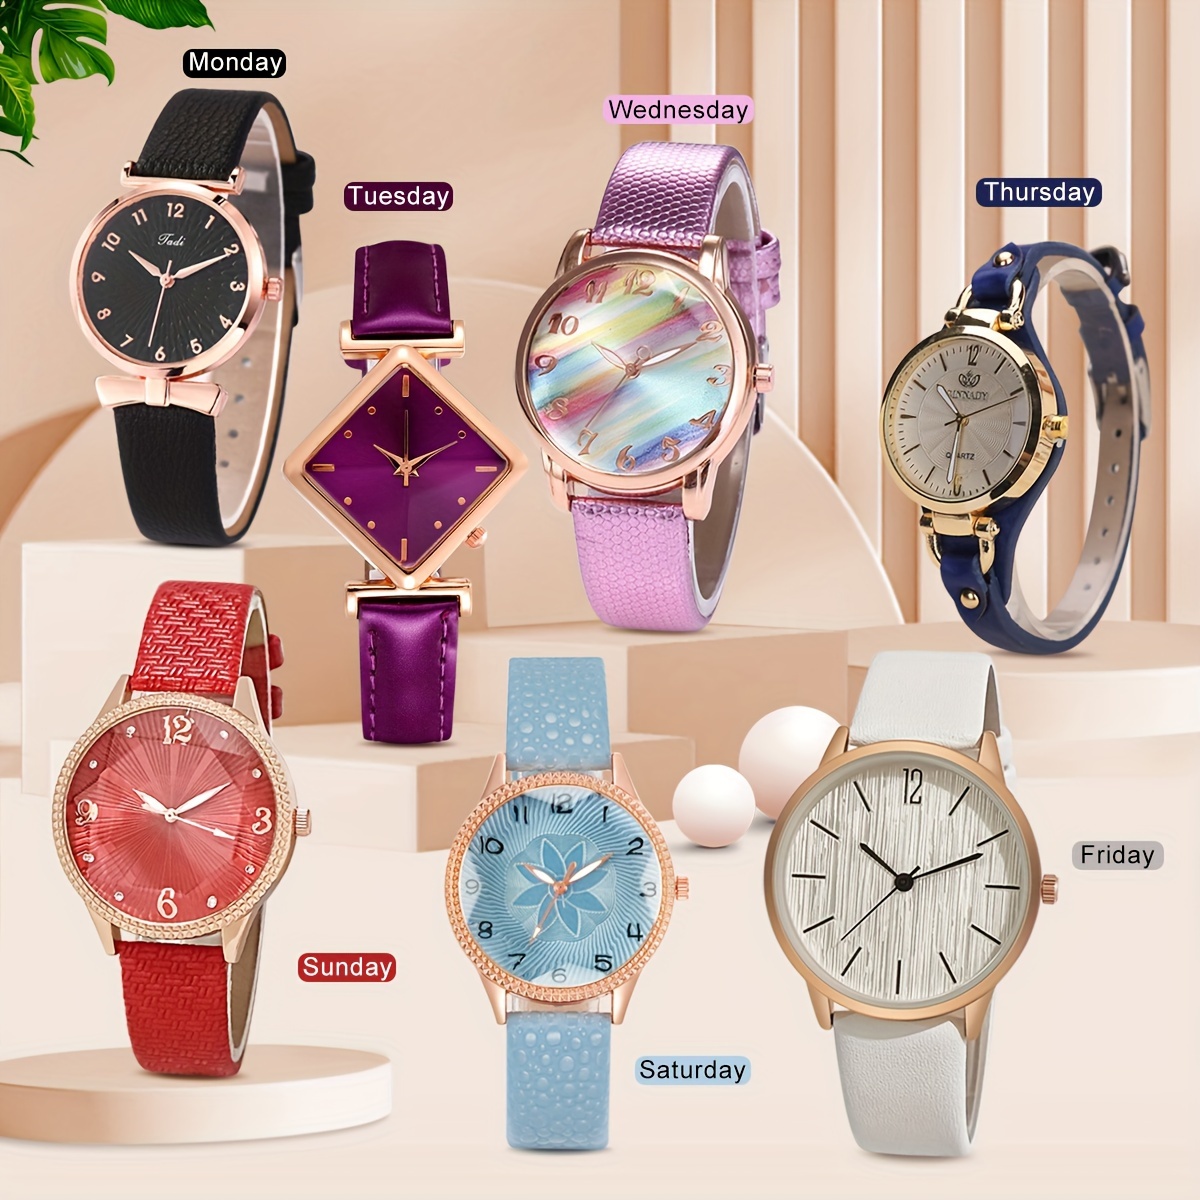 

Seven-pcs Set Of Women's Watches Quartz Women's Versatile Leather Strap Watch Combination 1 Week's Watch Set Holiday Gift